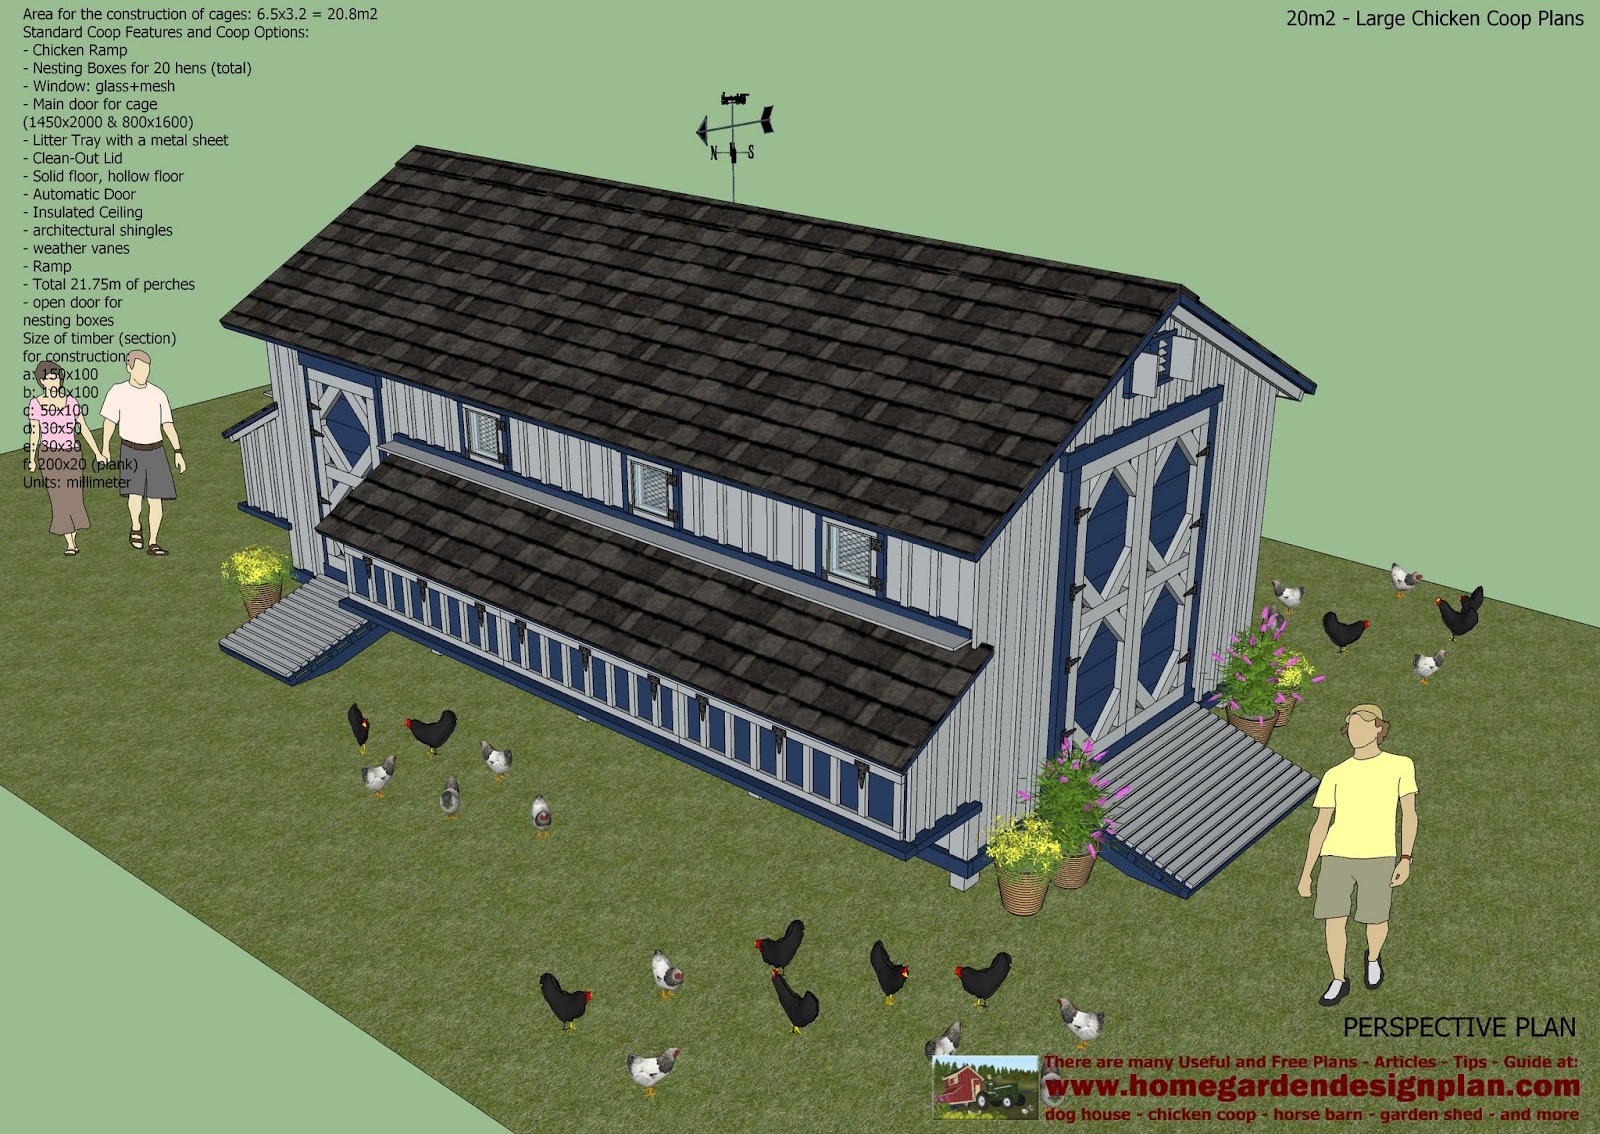  chicken coop plans - Chicken coop design - How to build a chicken coop